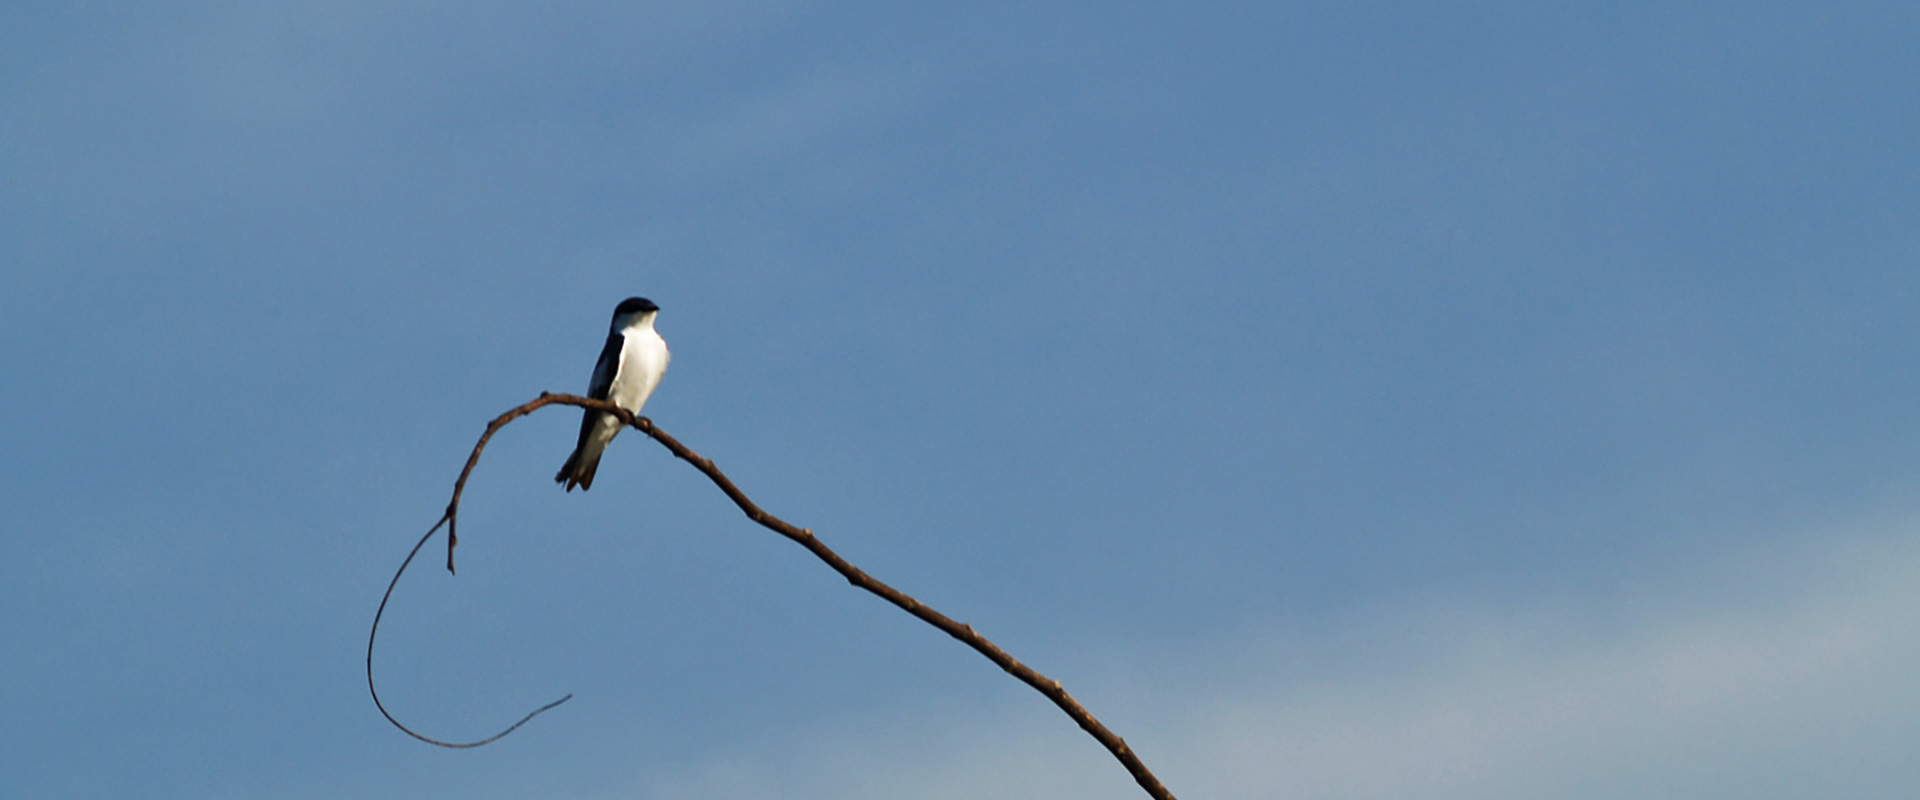 Kapawi Amazon Bird